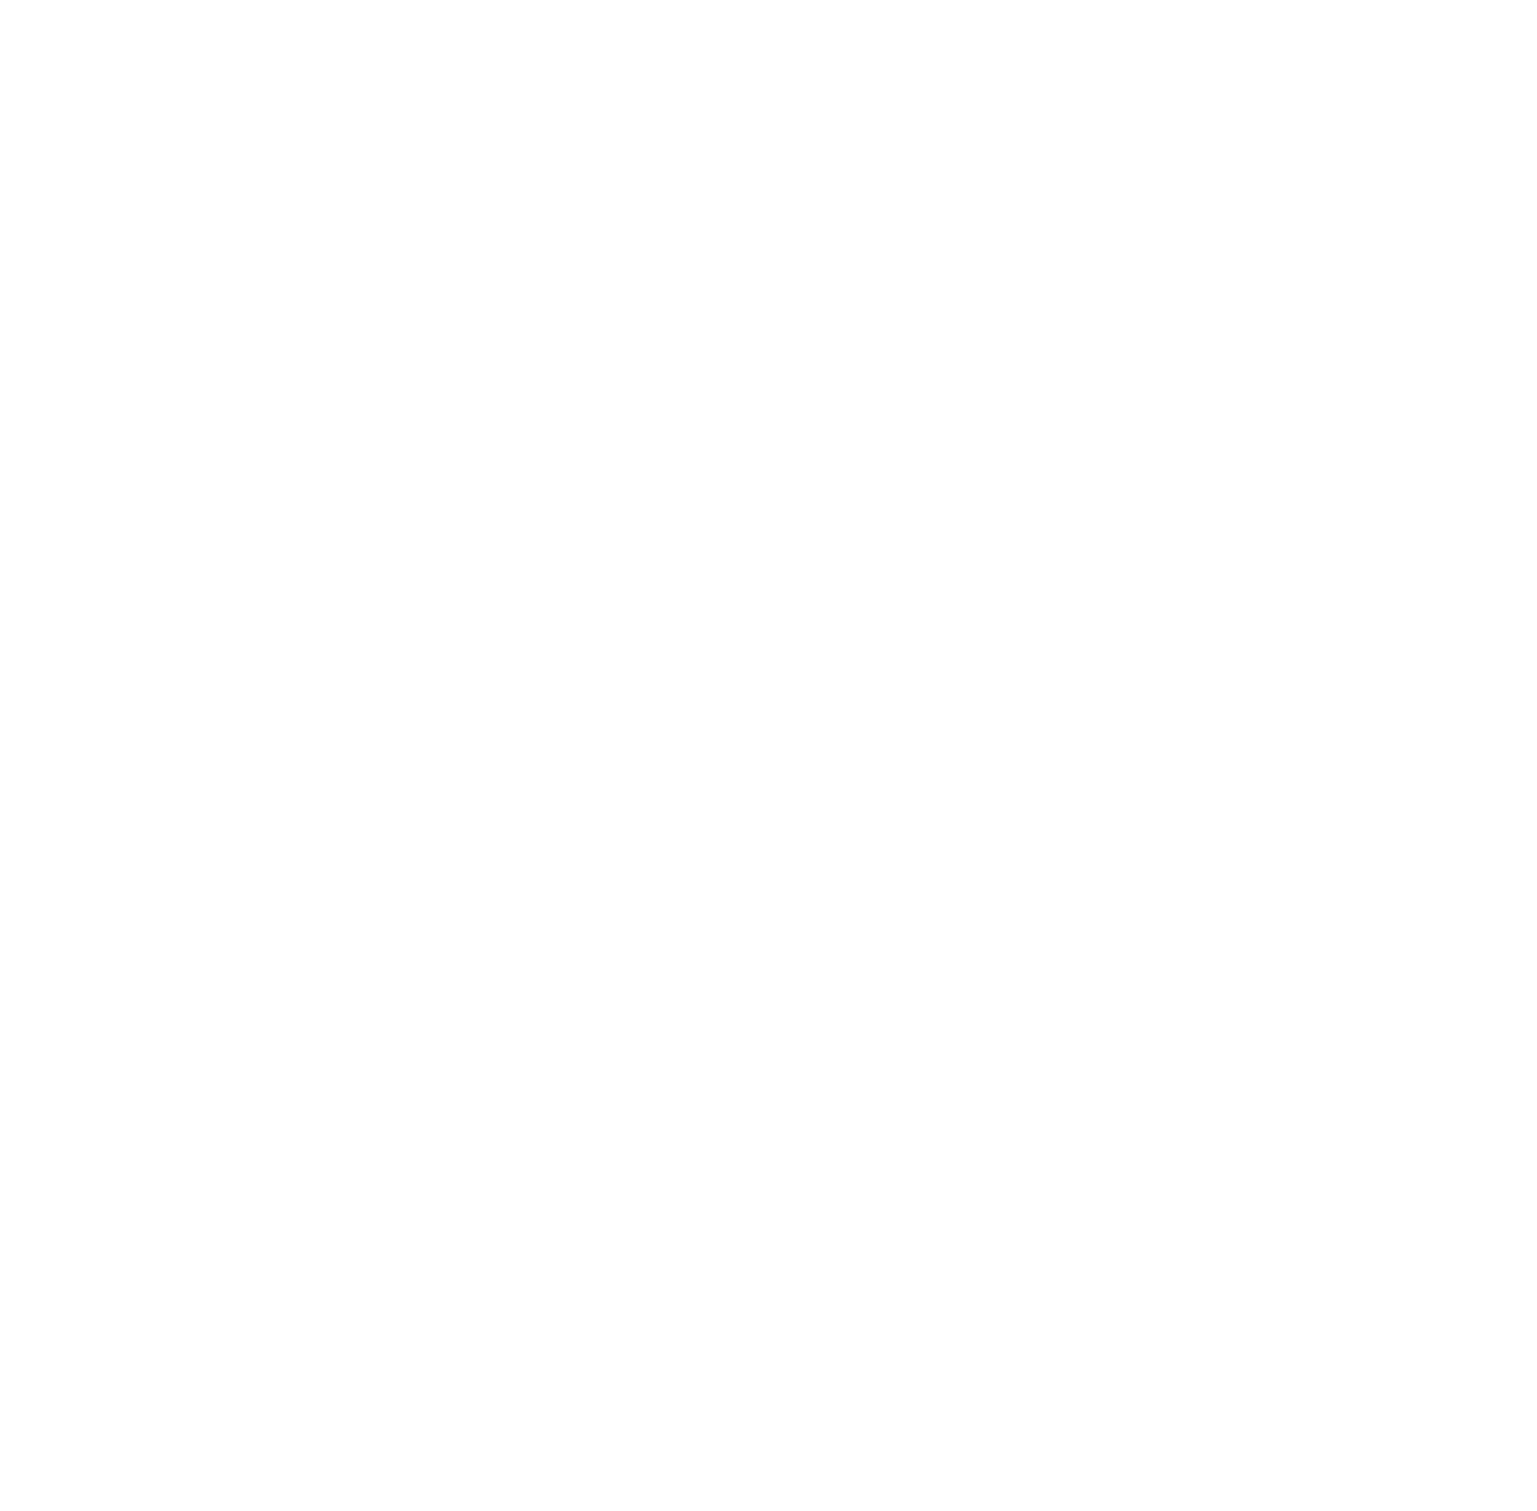 Loma Negra logo for dark backgrounds (transparent PNG)